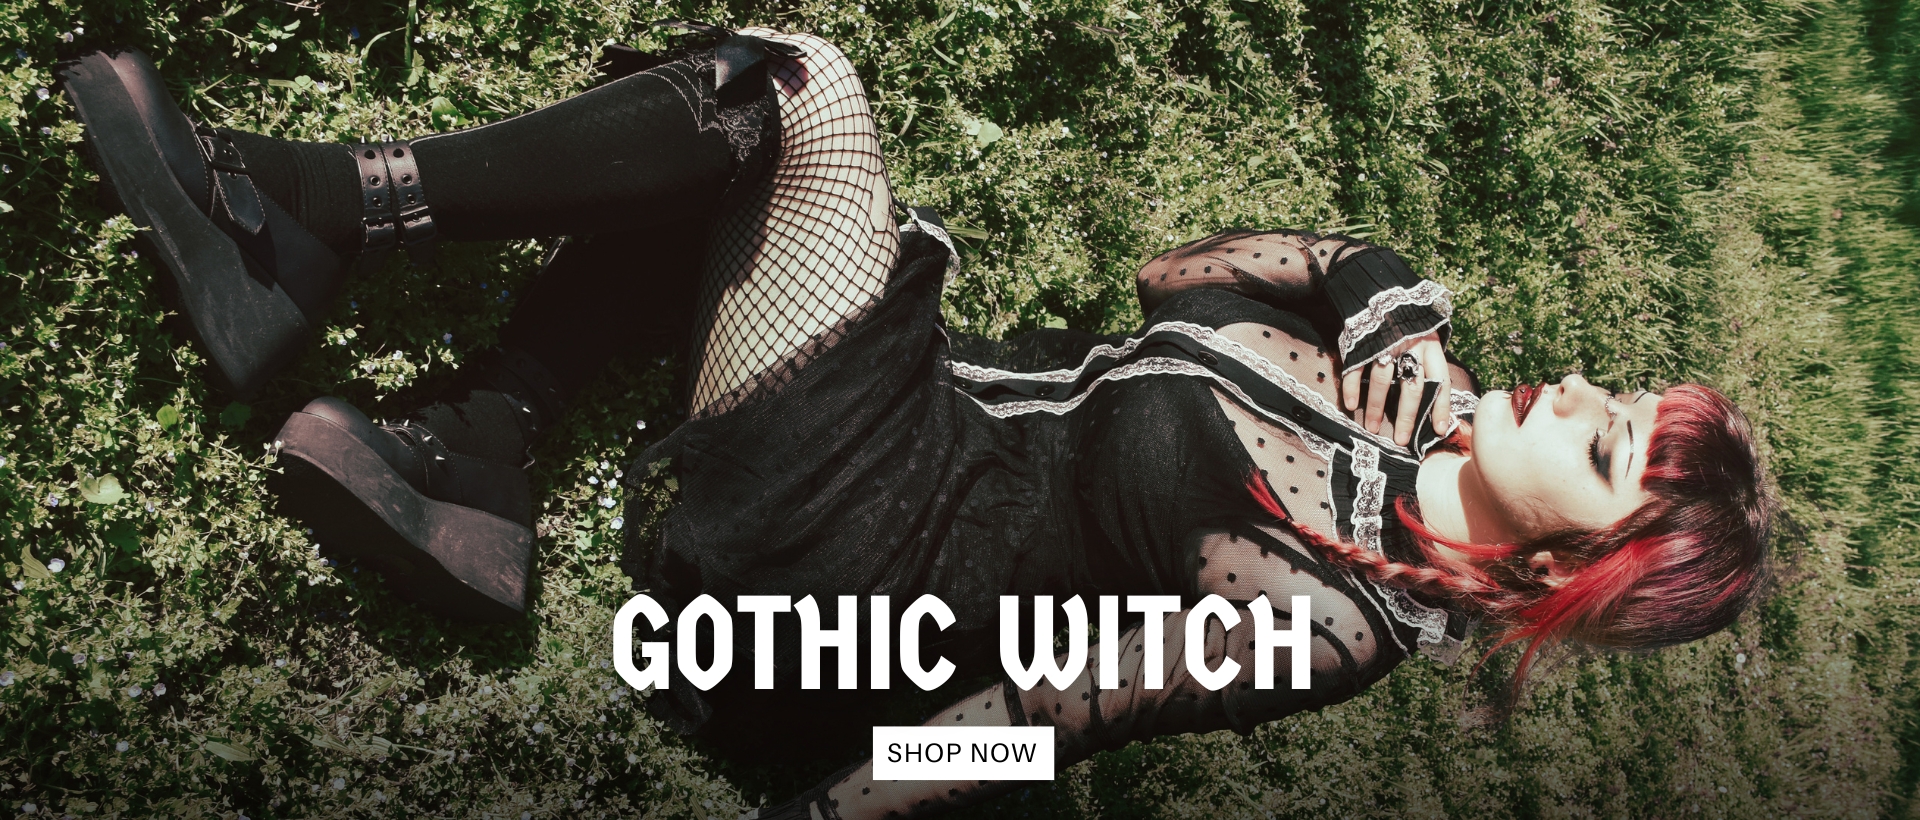 Jawbreaker Gothic Witch Edition